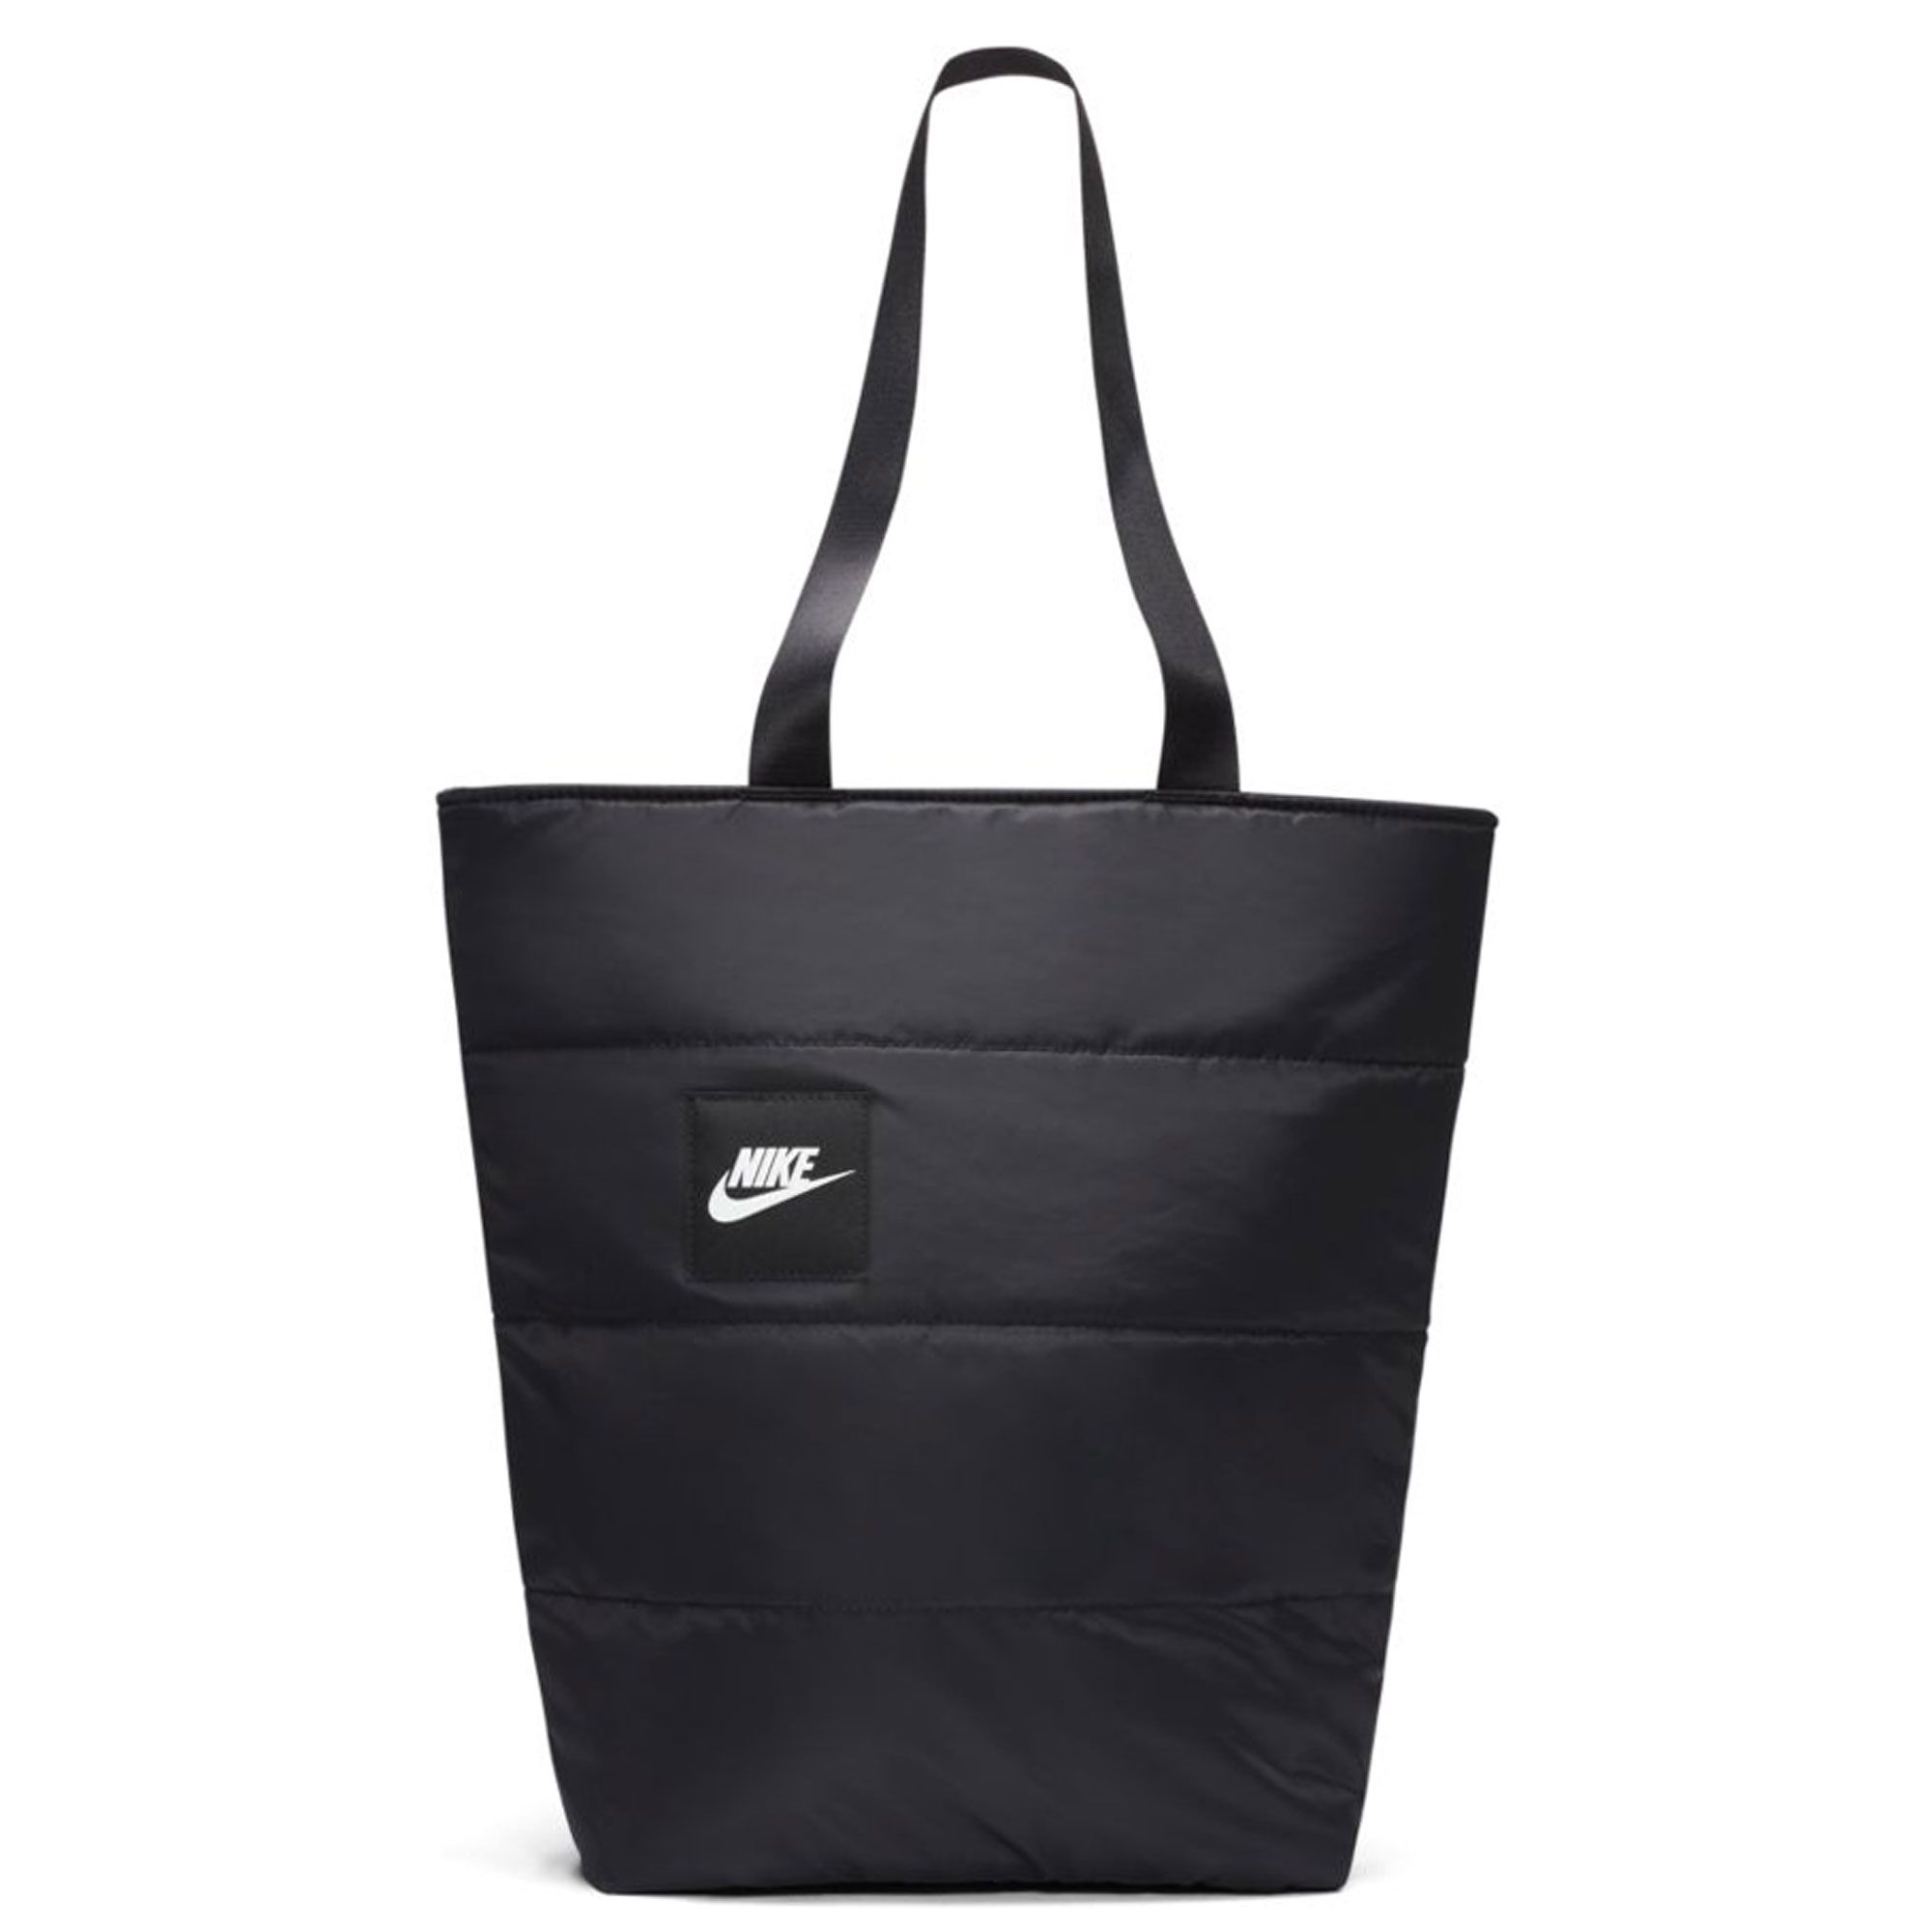 Nike Heritage Crossbody Bag In Black/black/white - Fast Shipping